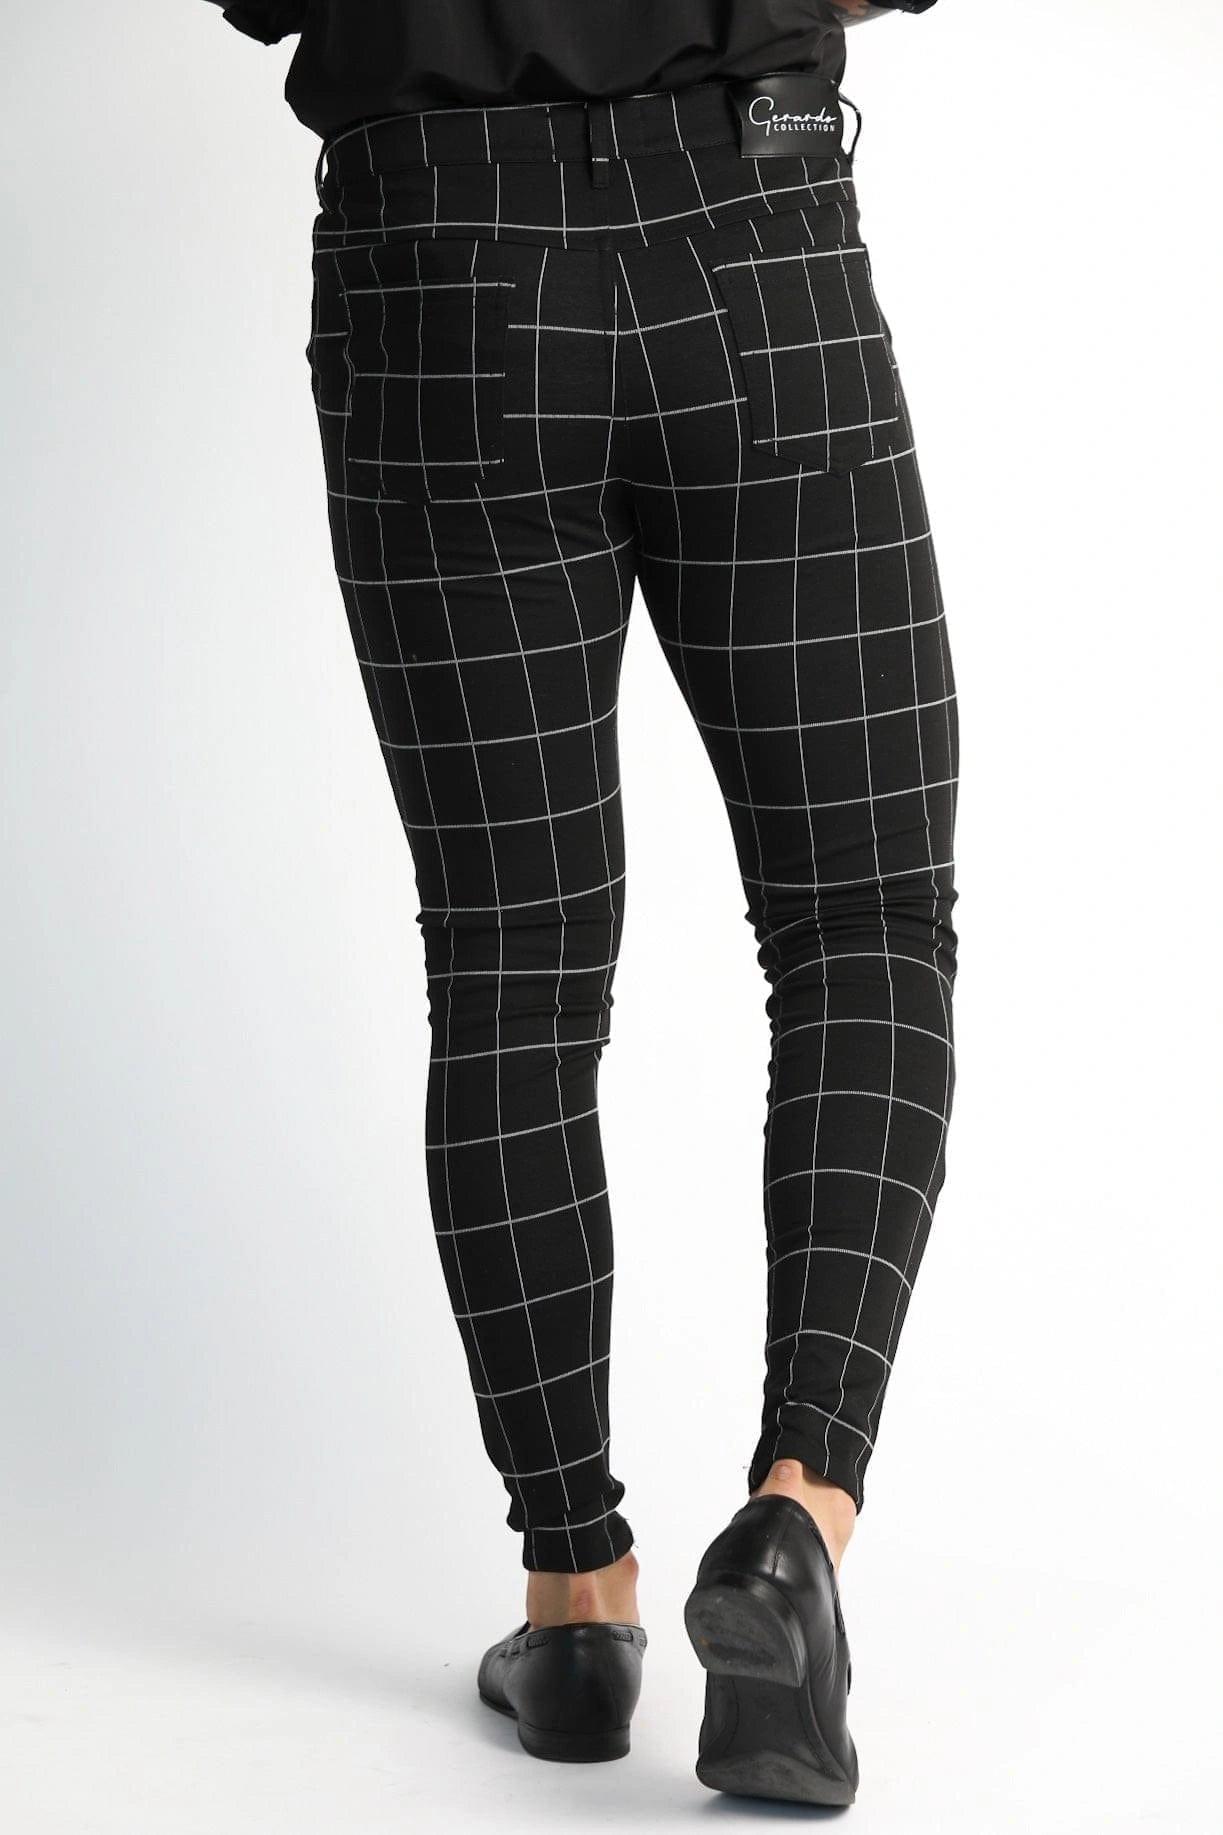 Men's Checkered Regular Fit Shirt – Levis India Store